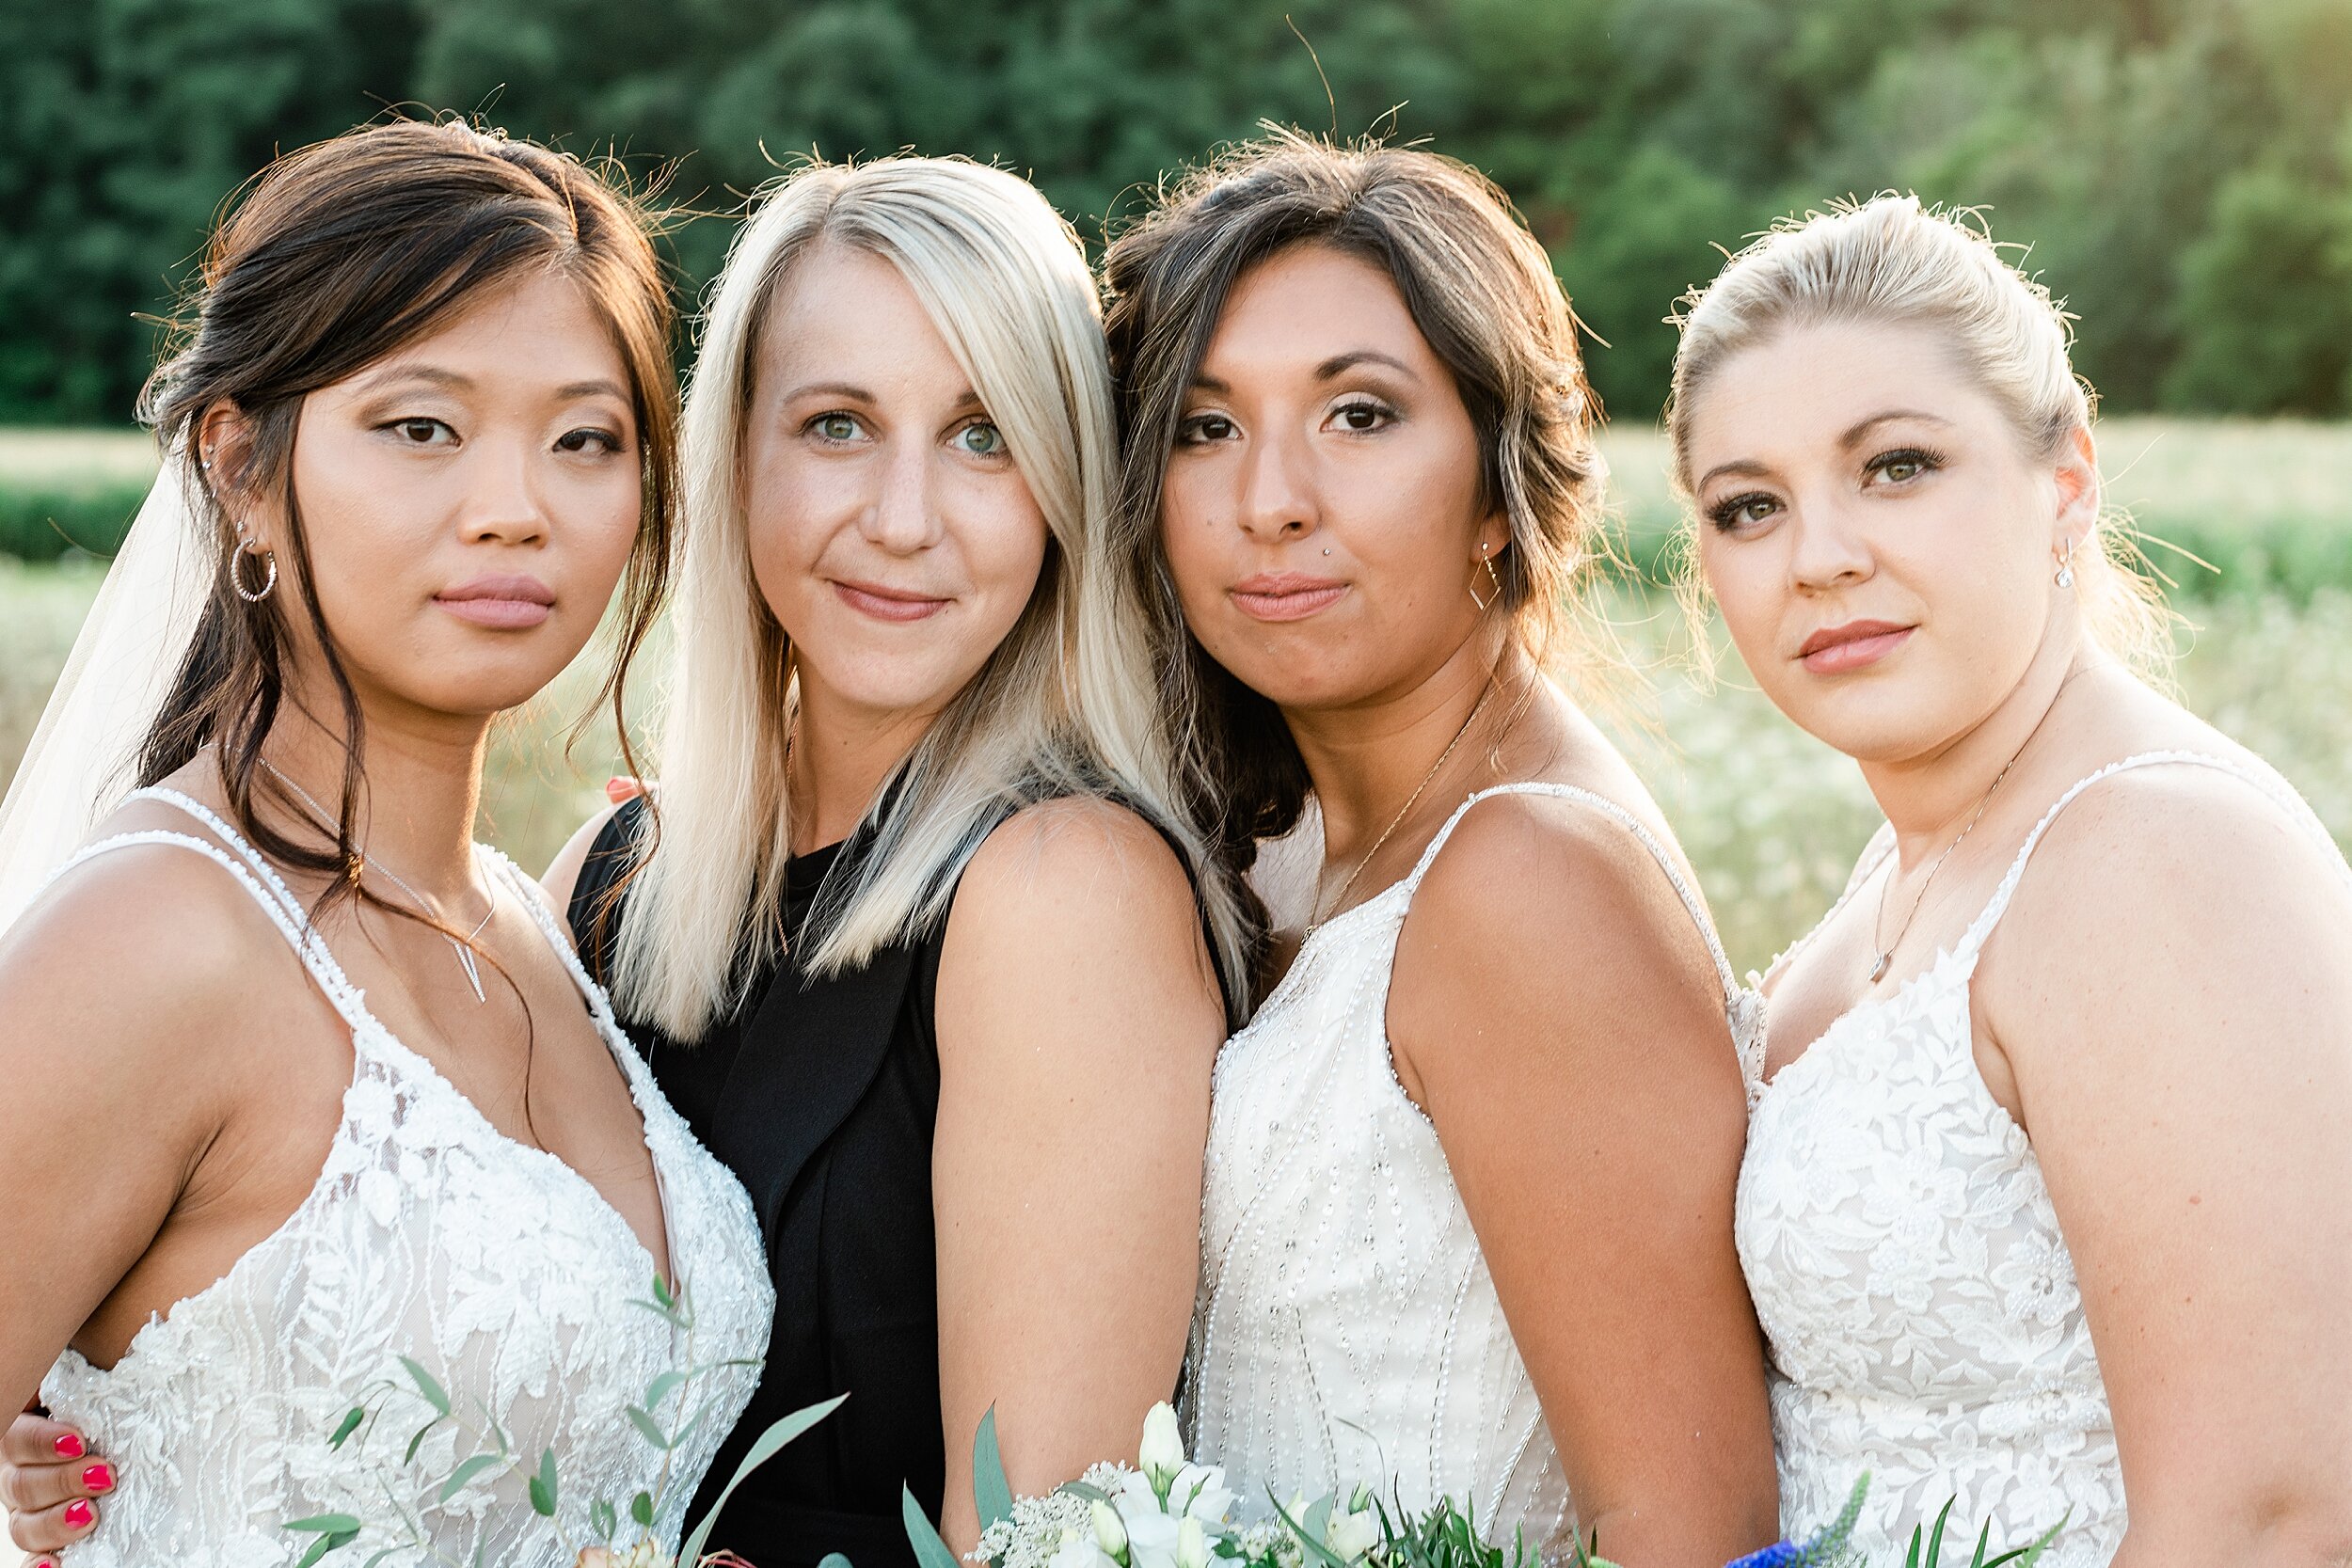 sisters-bridal-boutique-laudicks-jewelry-betsys-bouquets-van-wert-ohio-wedding-photographer-the-association-photography_6923.jpg